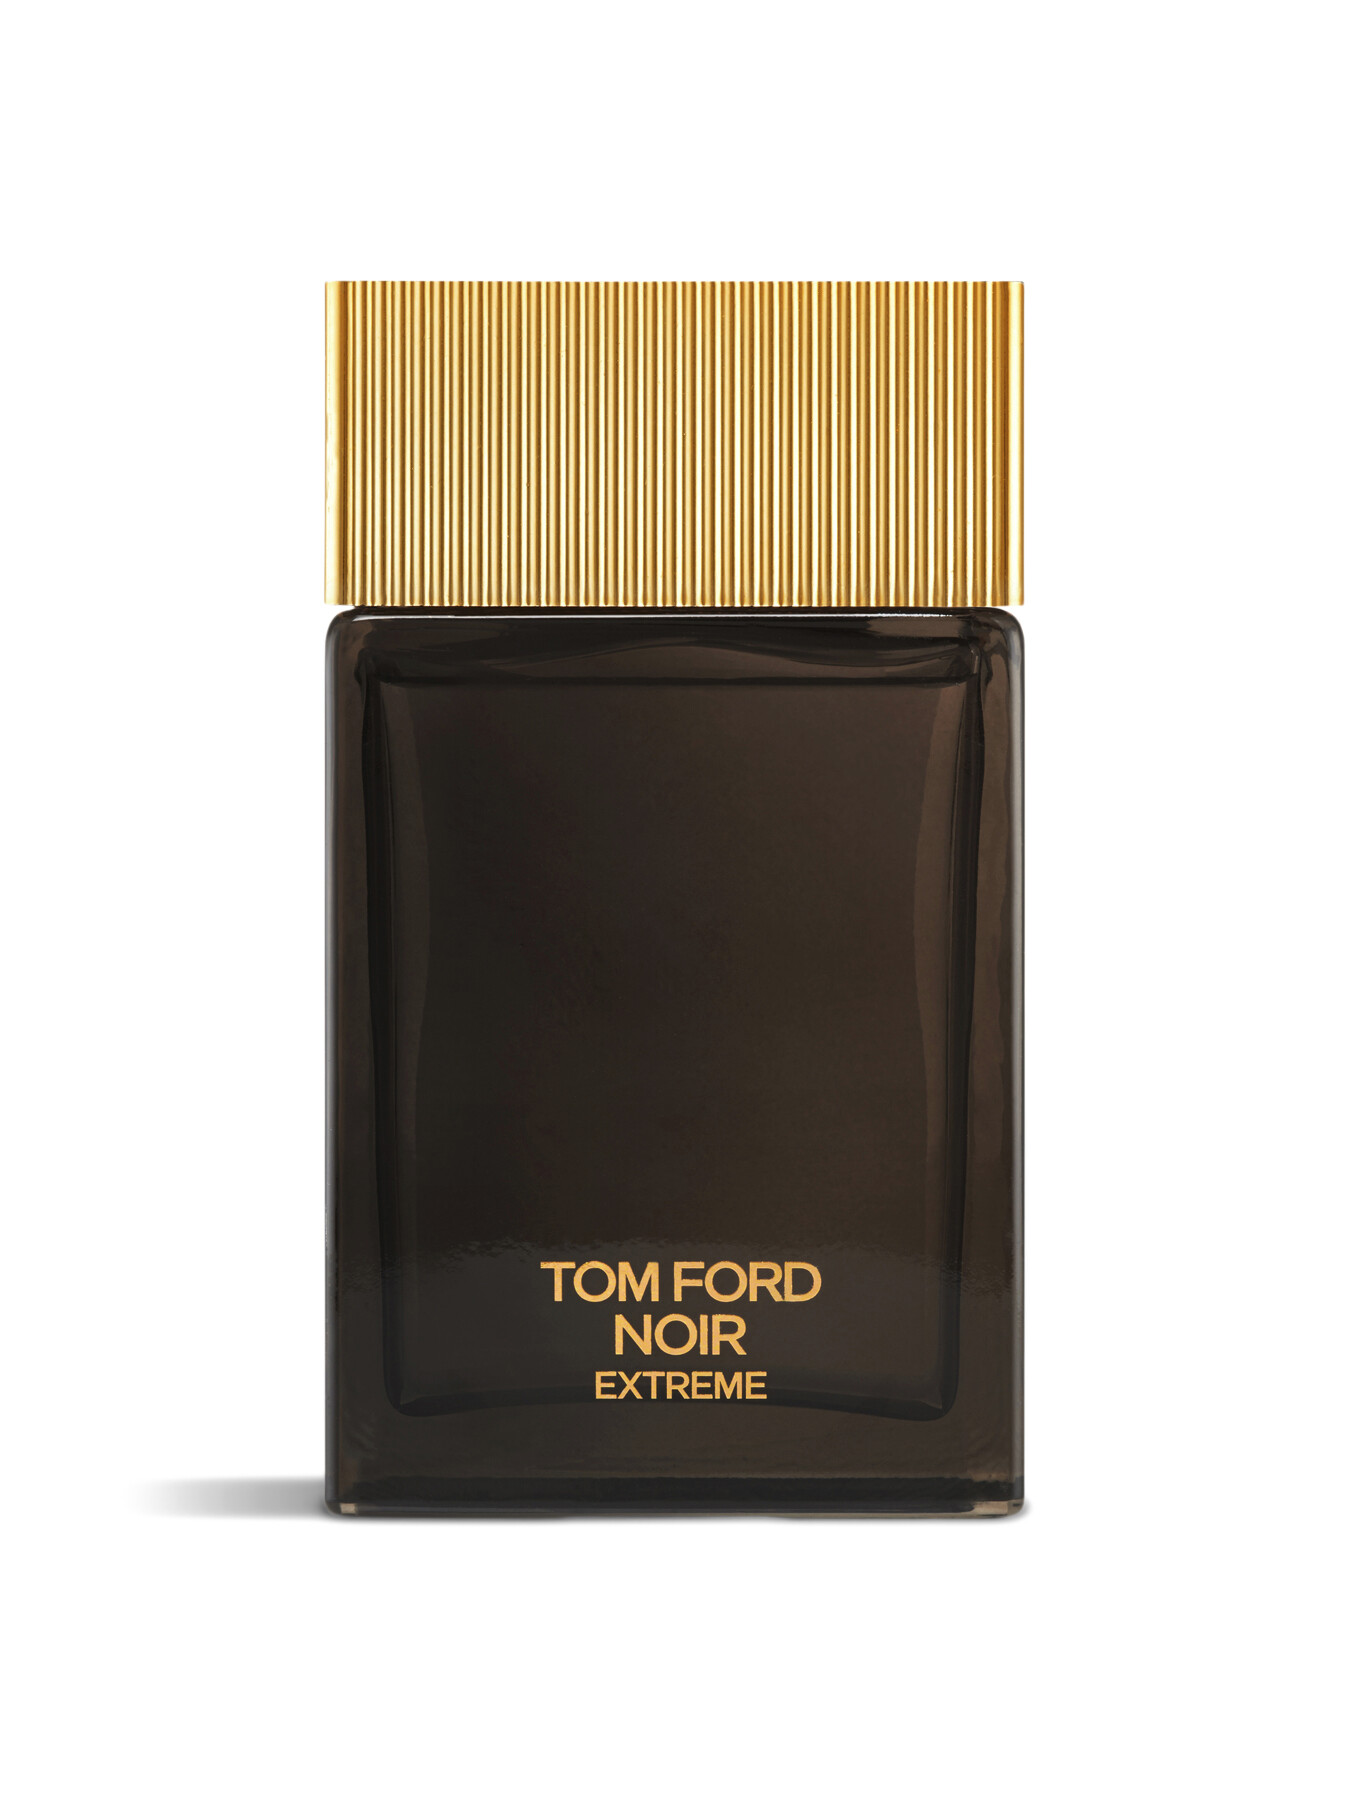 Tom Ford Noir Extreme Eau de Parfum 100 ml | Fenwick